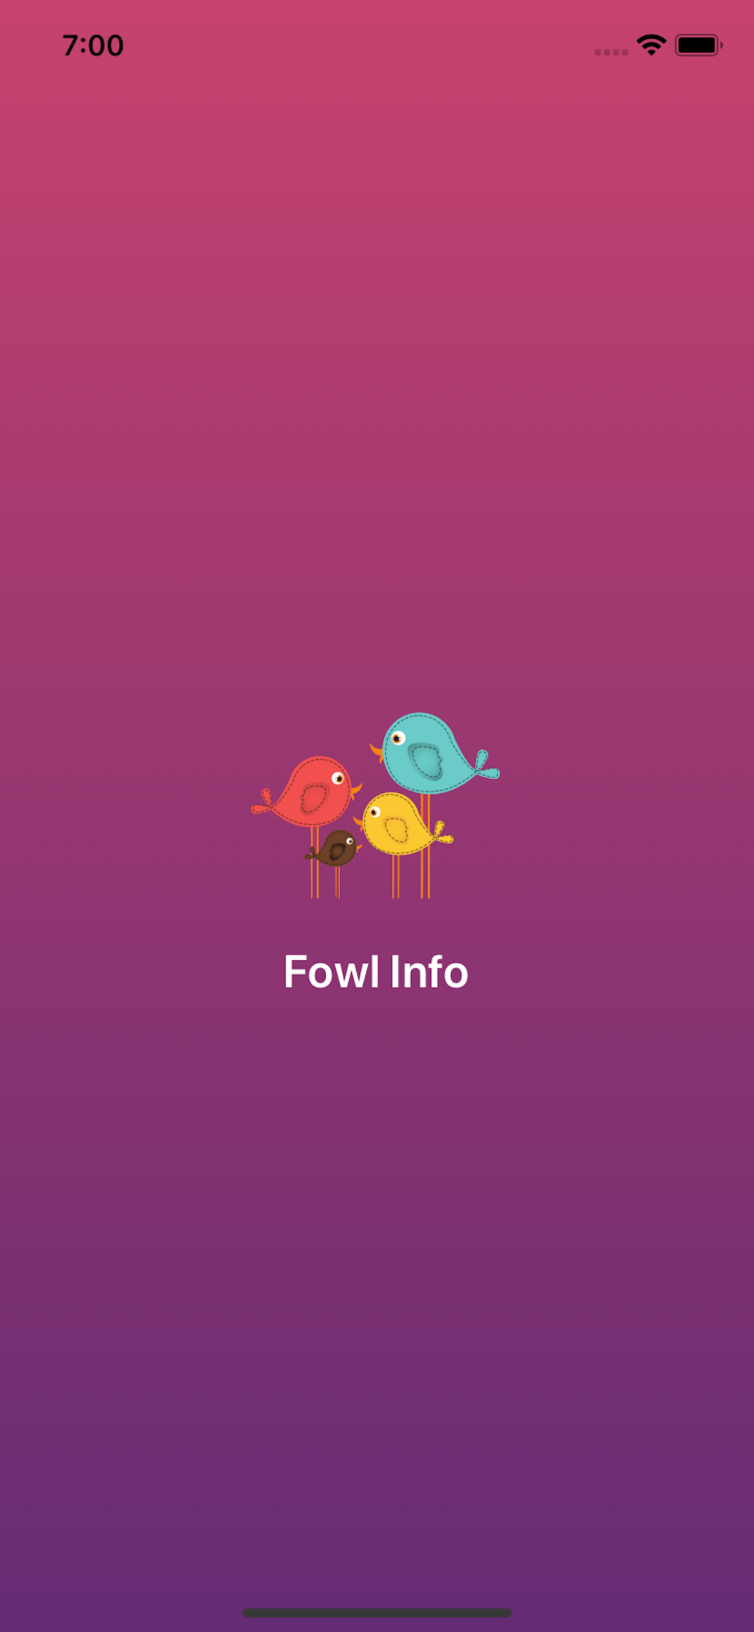 Fowl Info Application